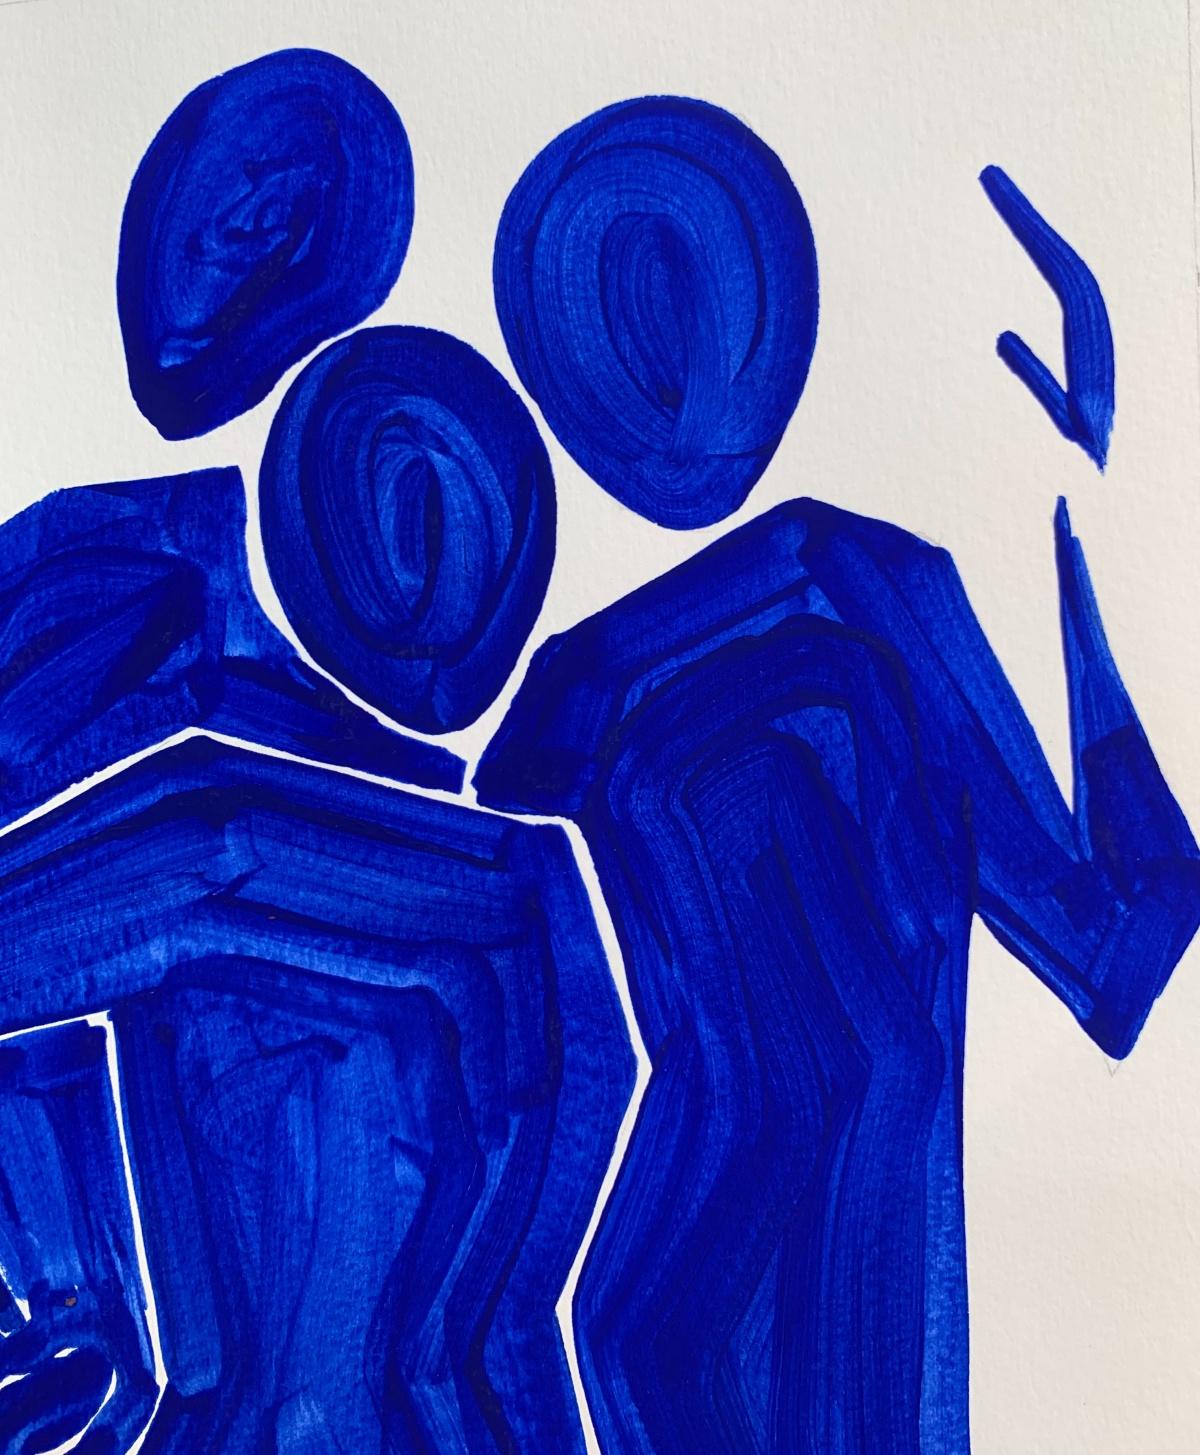 Three blue figures - Figurative Painting on Paper, Minimalist, Colorful, Vibrant 3